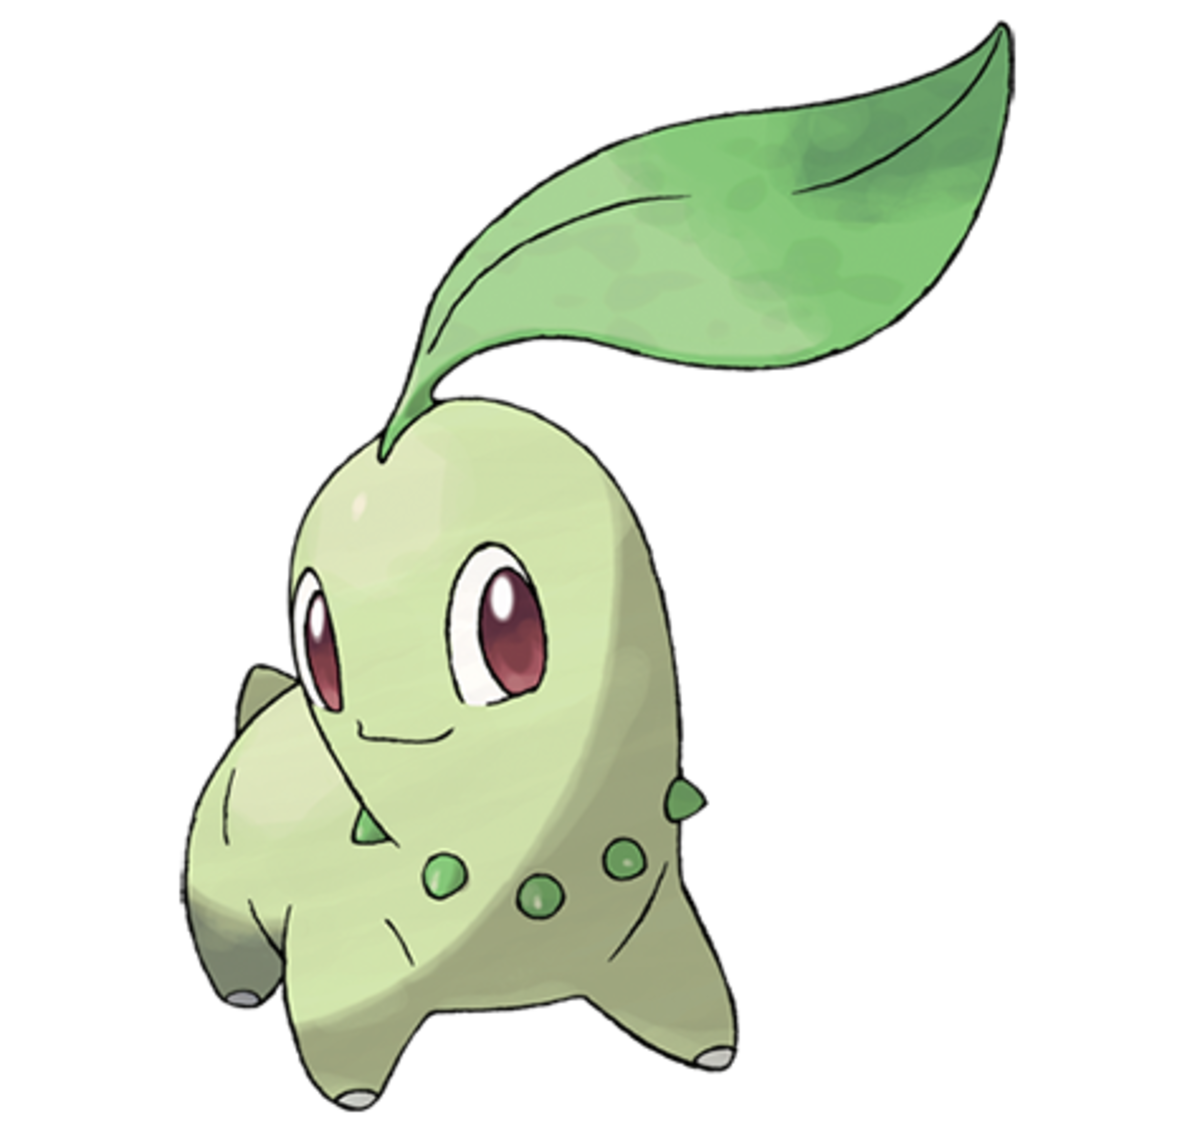 Top 50 Cutest Pokémon Ever Made - LevelSkip